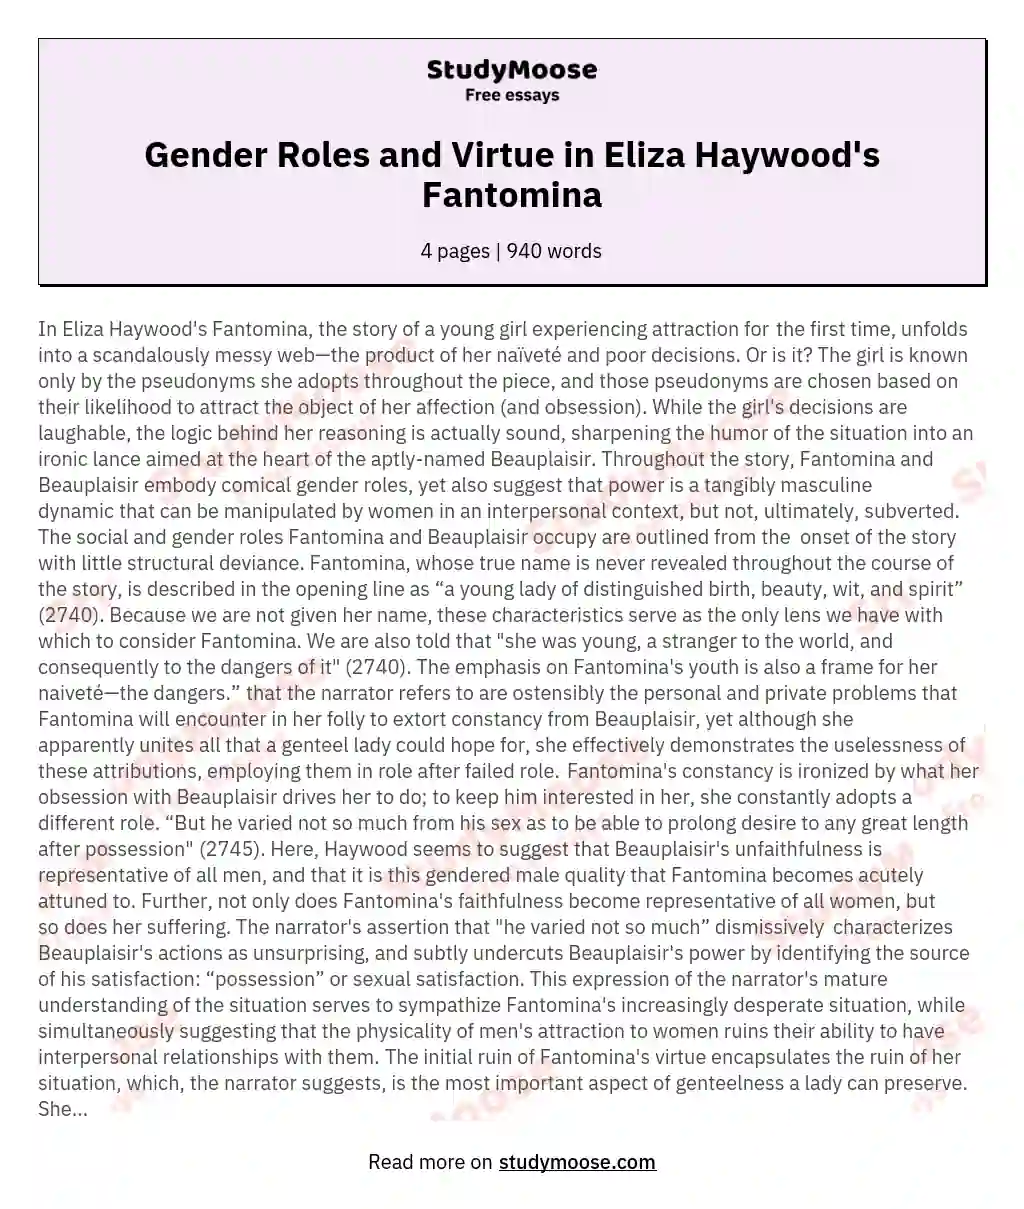 Gender Roles and Virtue in Eliza Haywood's Fantomina essay